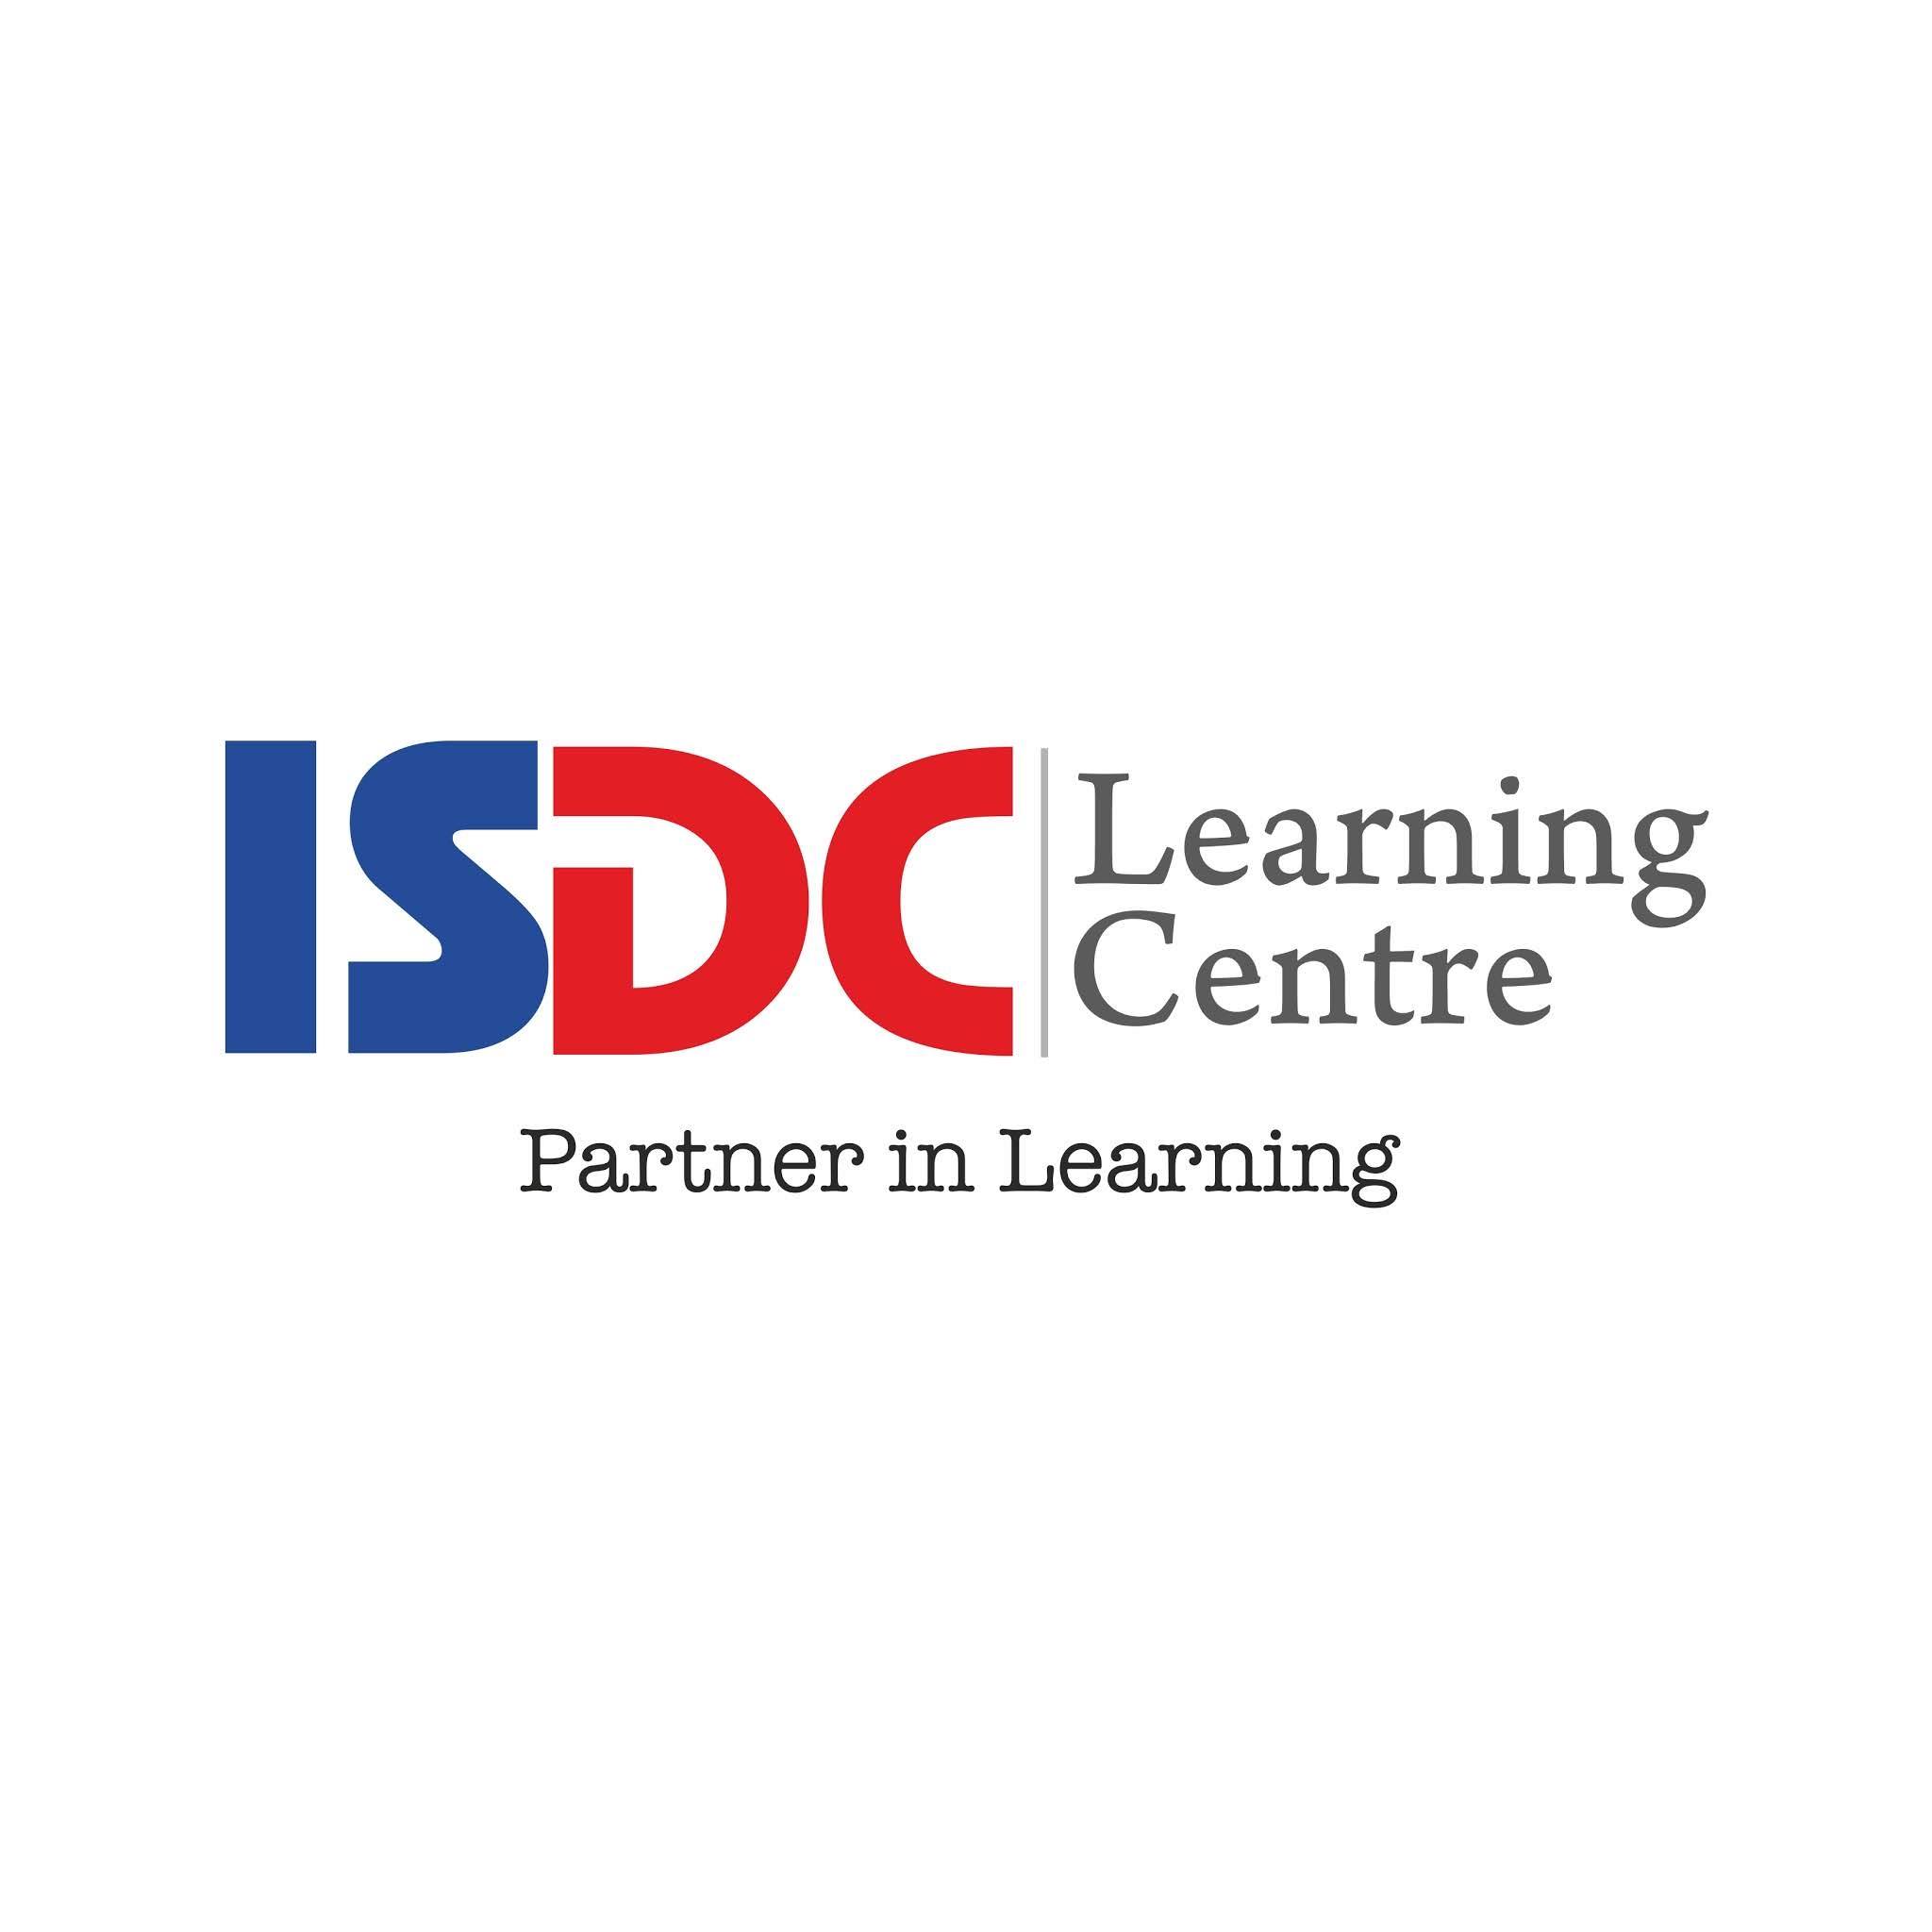 ISDC Learning Centre Logo